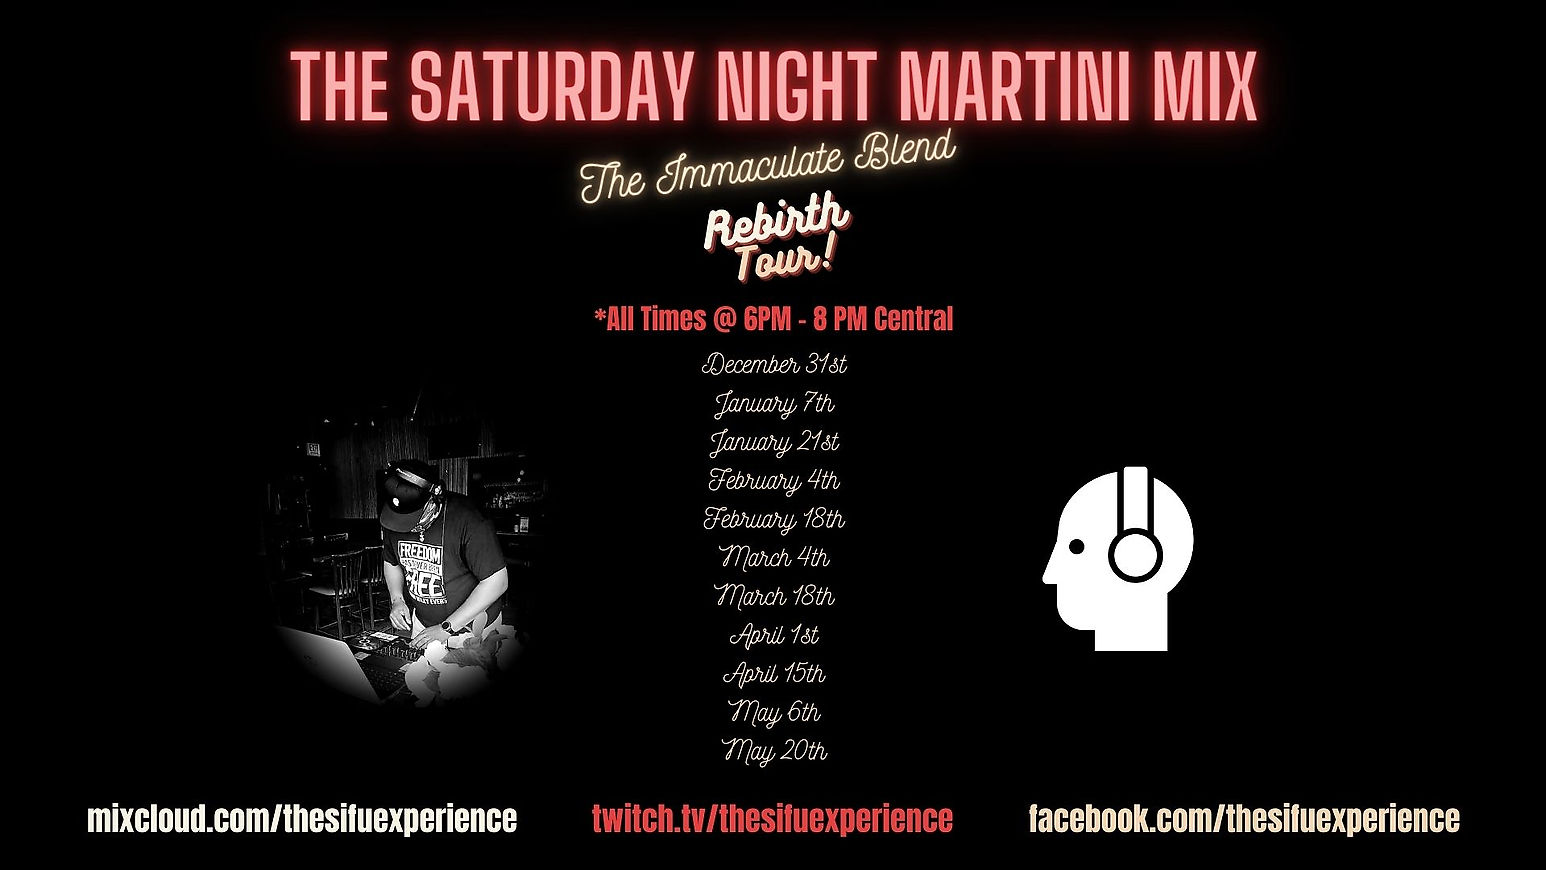 The Saturday Night Martini Mix